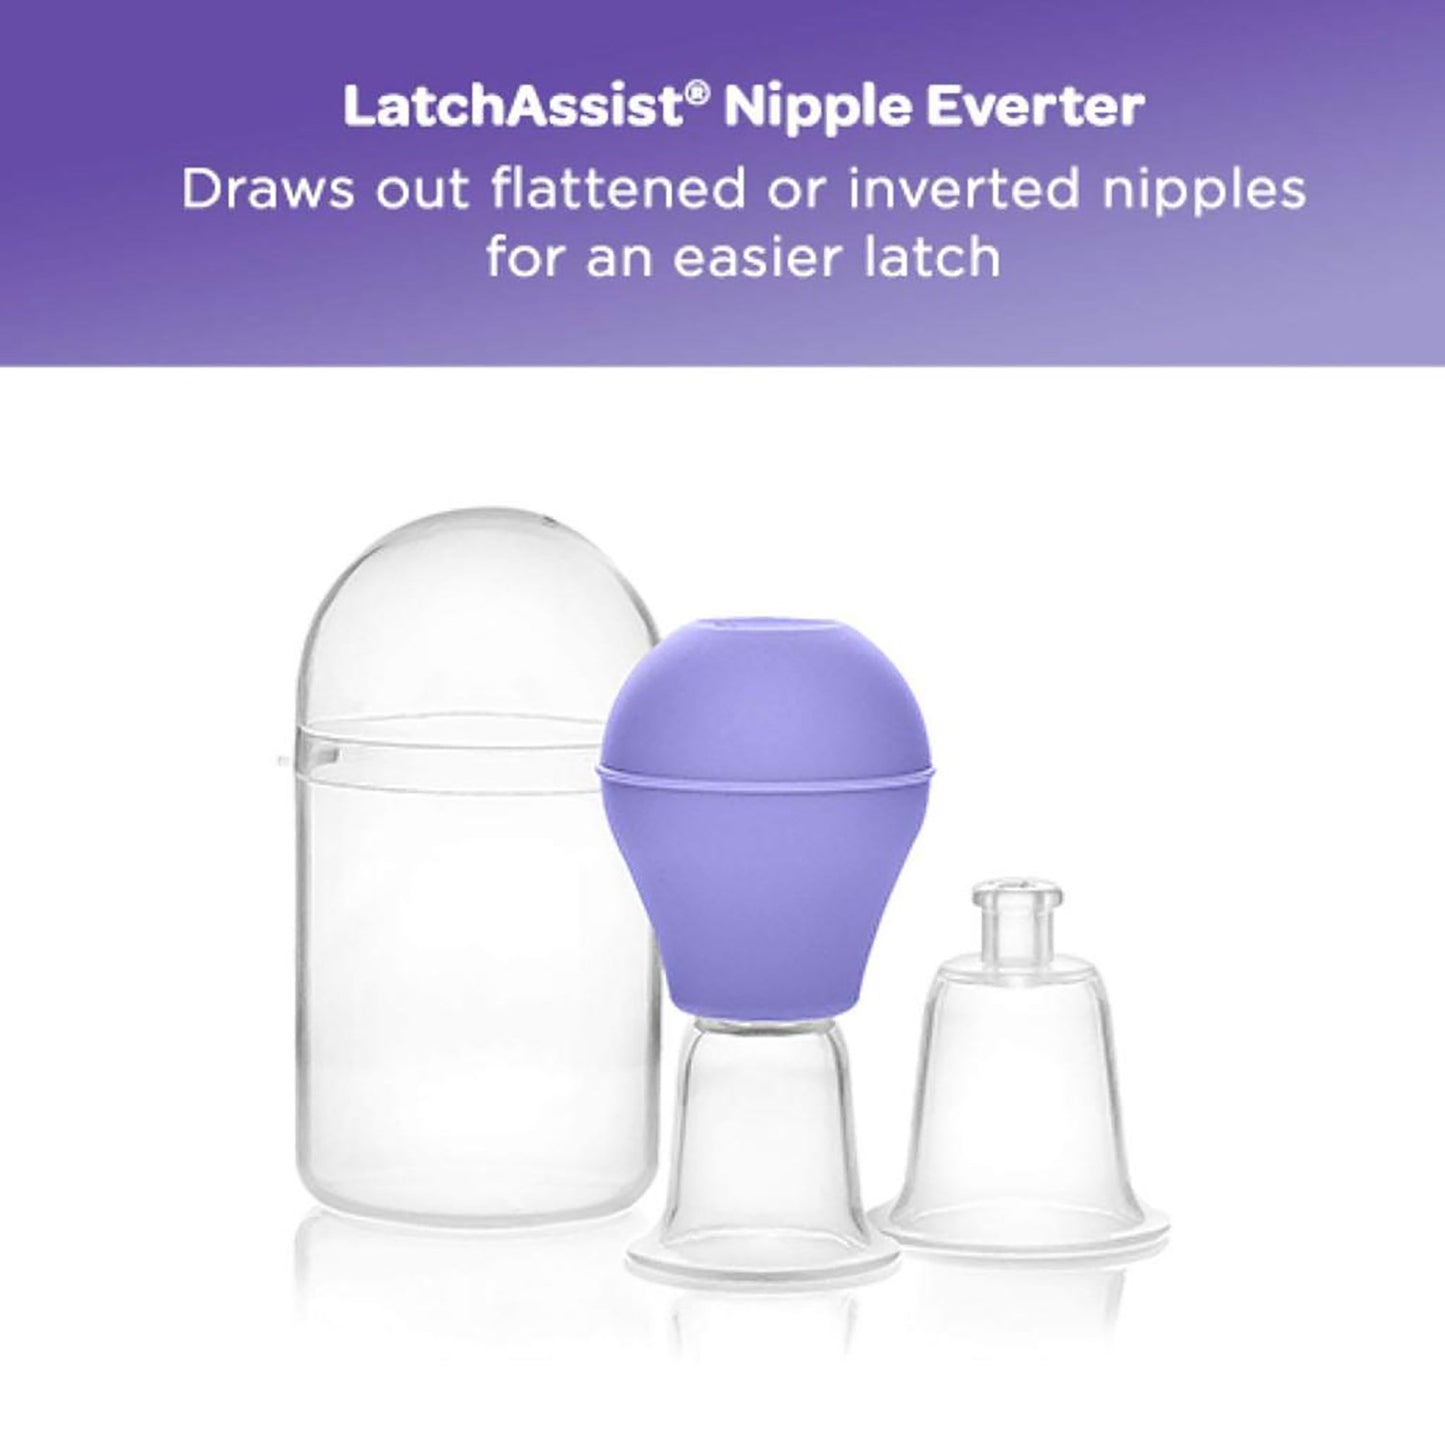 Lansinoh® Breastfeeding Starter Set, 4 ct